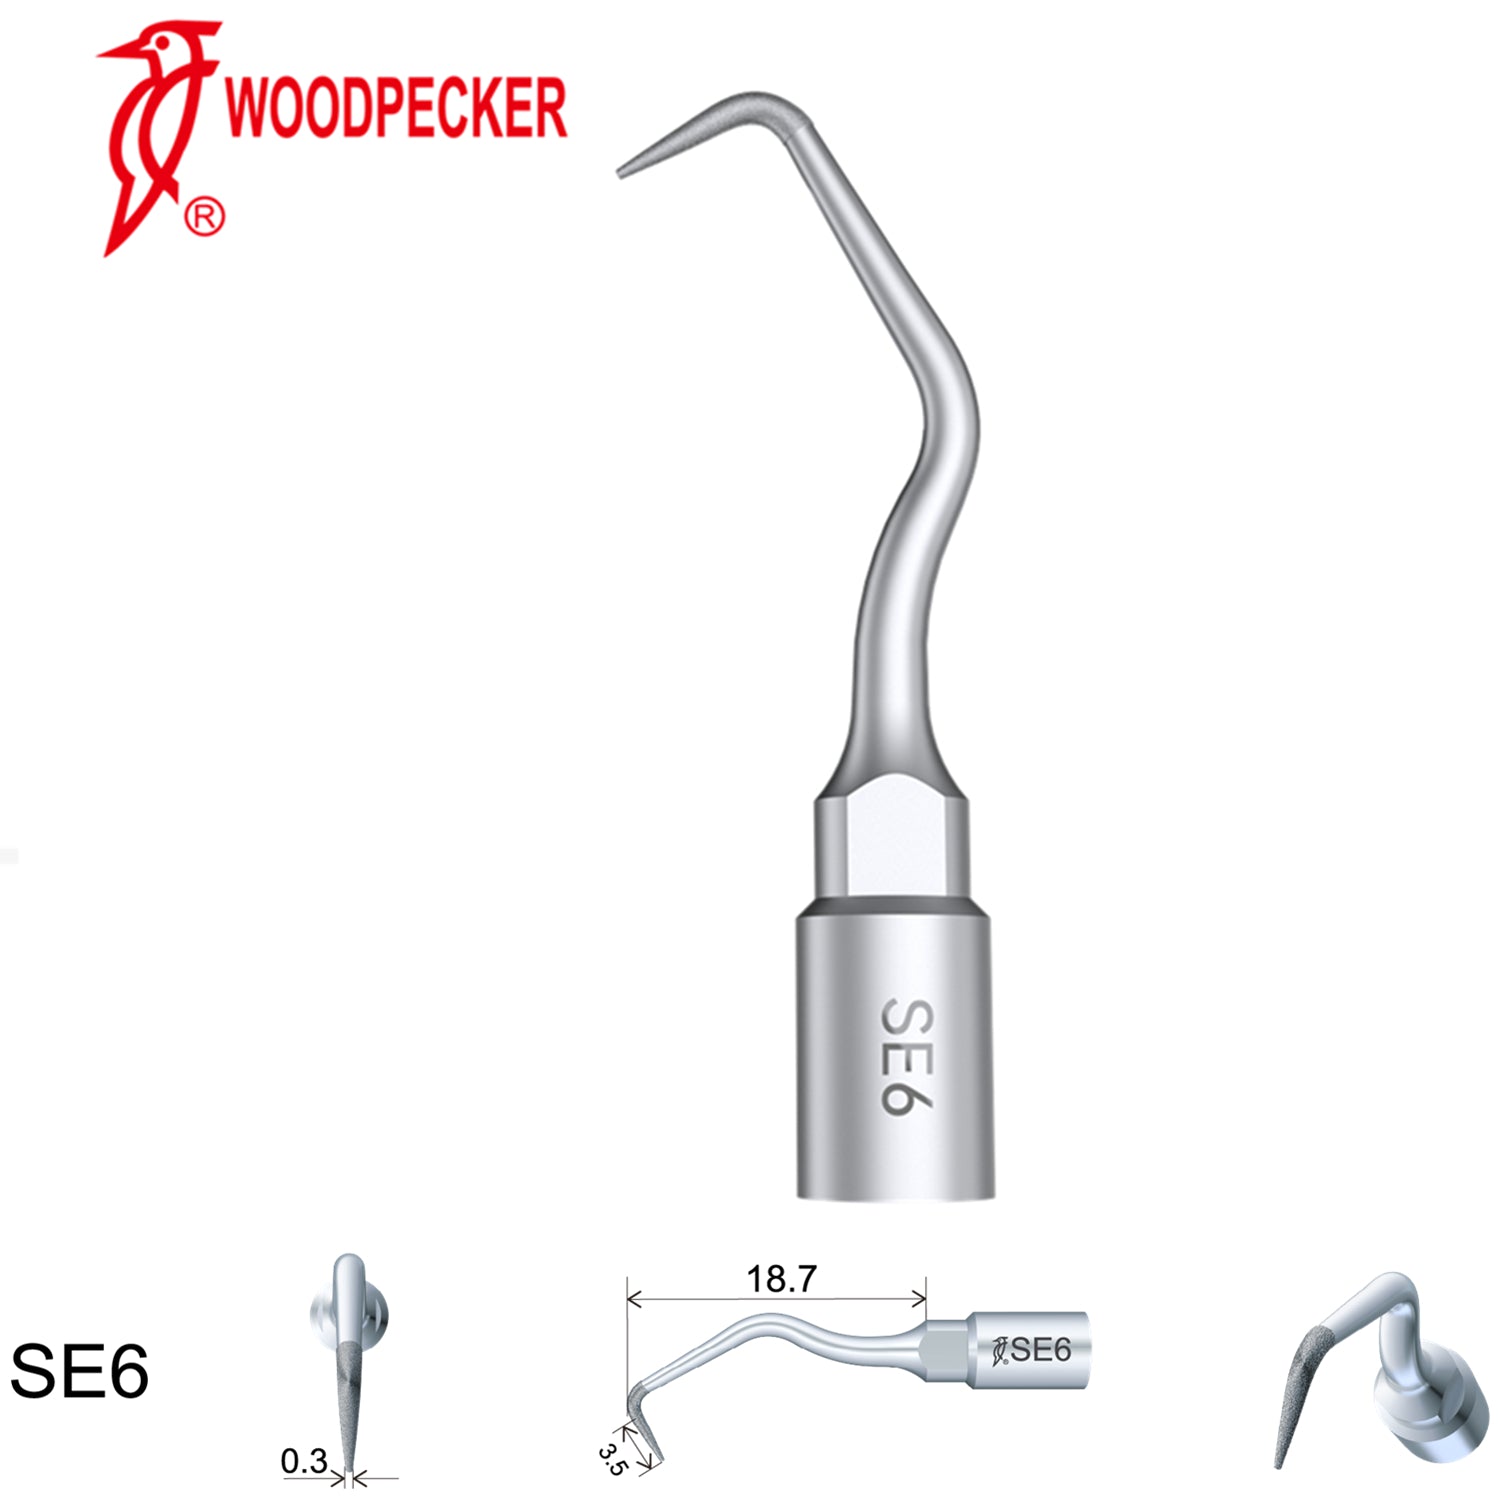 Woodpecker Ultrasonic Perio Bone Surgery Tips fit for Surgical Smart&Satelec Perio